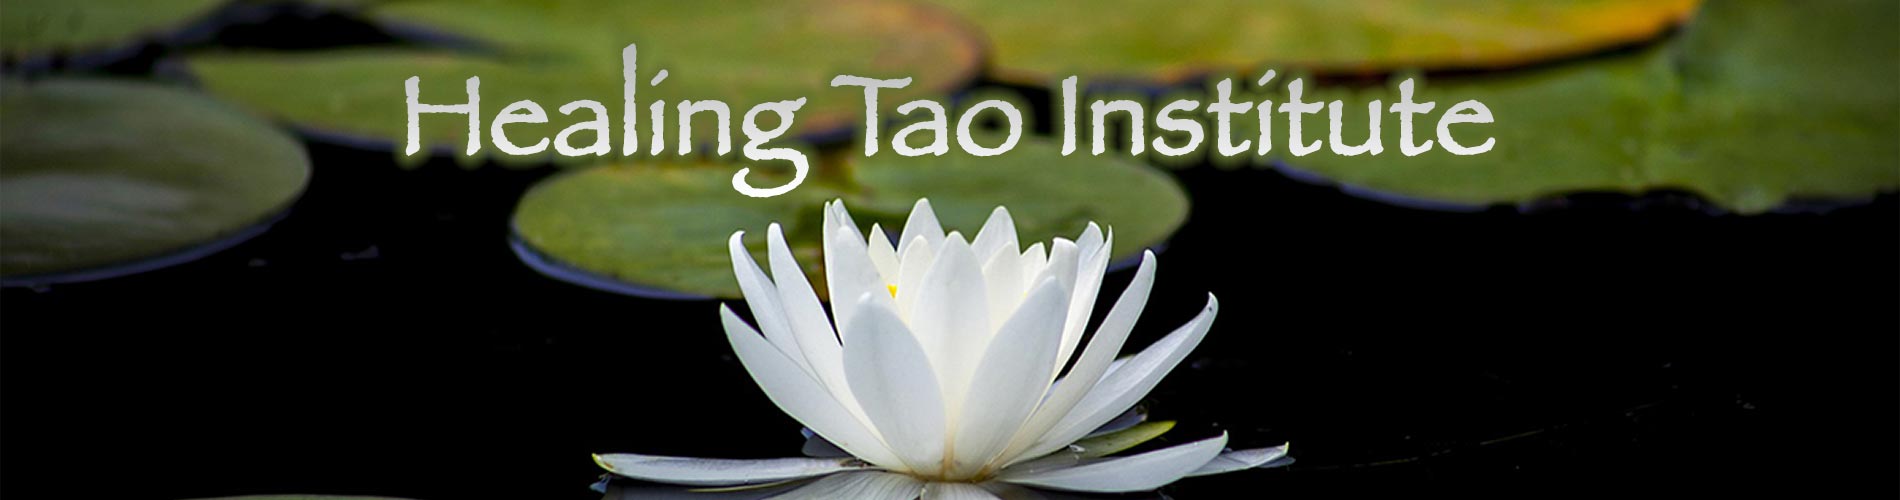 Healing Tao Institute